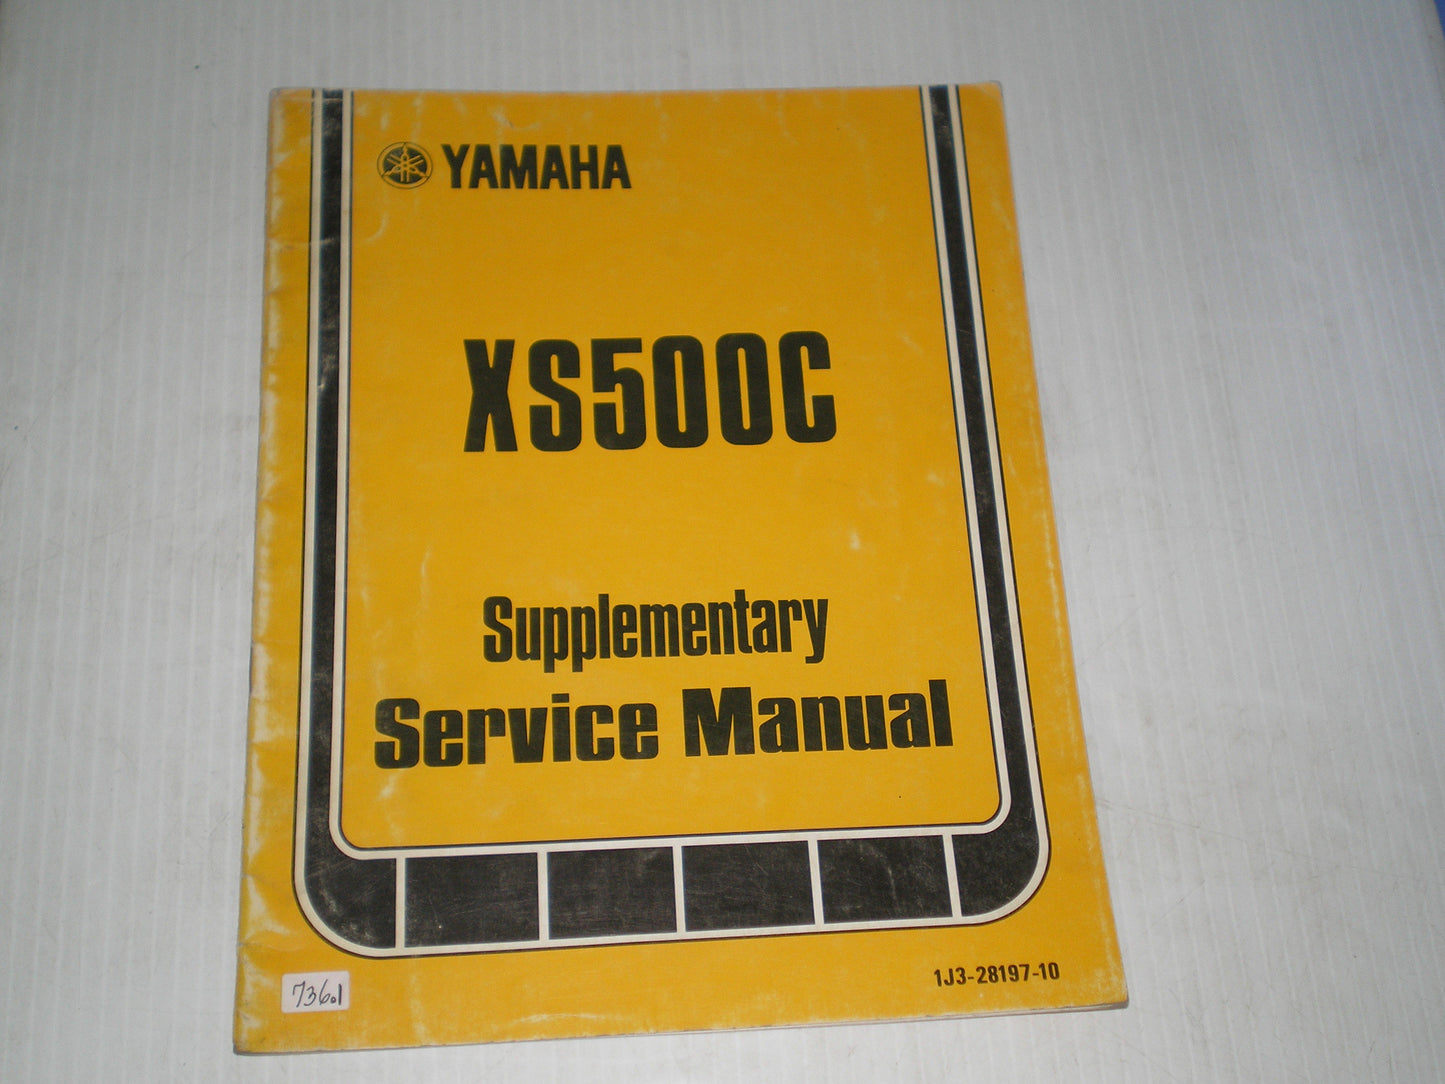 YAMAHA XS500C  XS500 C 1976 Service Manual Supplement  1J3-28197-10  LIT-11616-00-08  #736.1